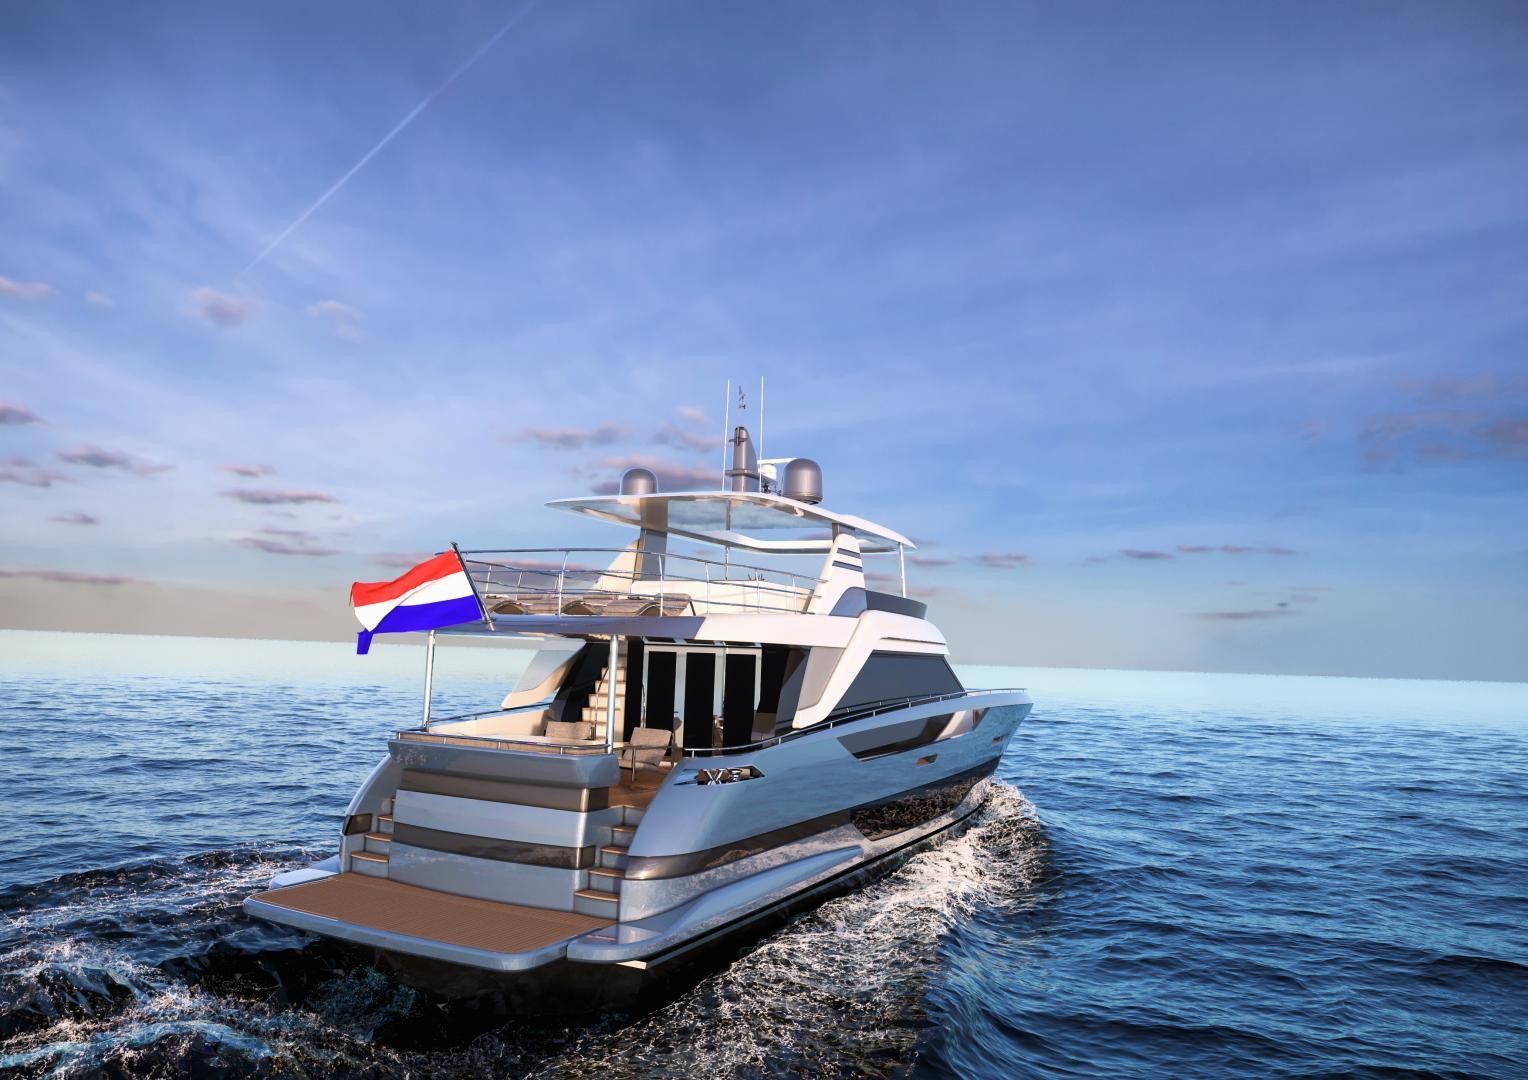 Van der Valk Shipyard unveiled a striking new modern version of its successful Flybridge series of powerboats